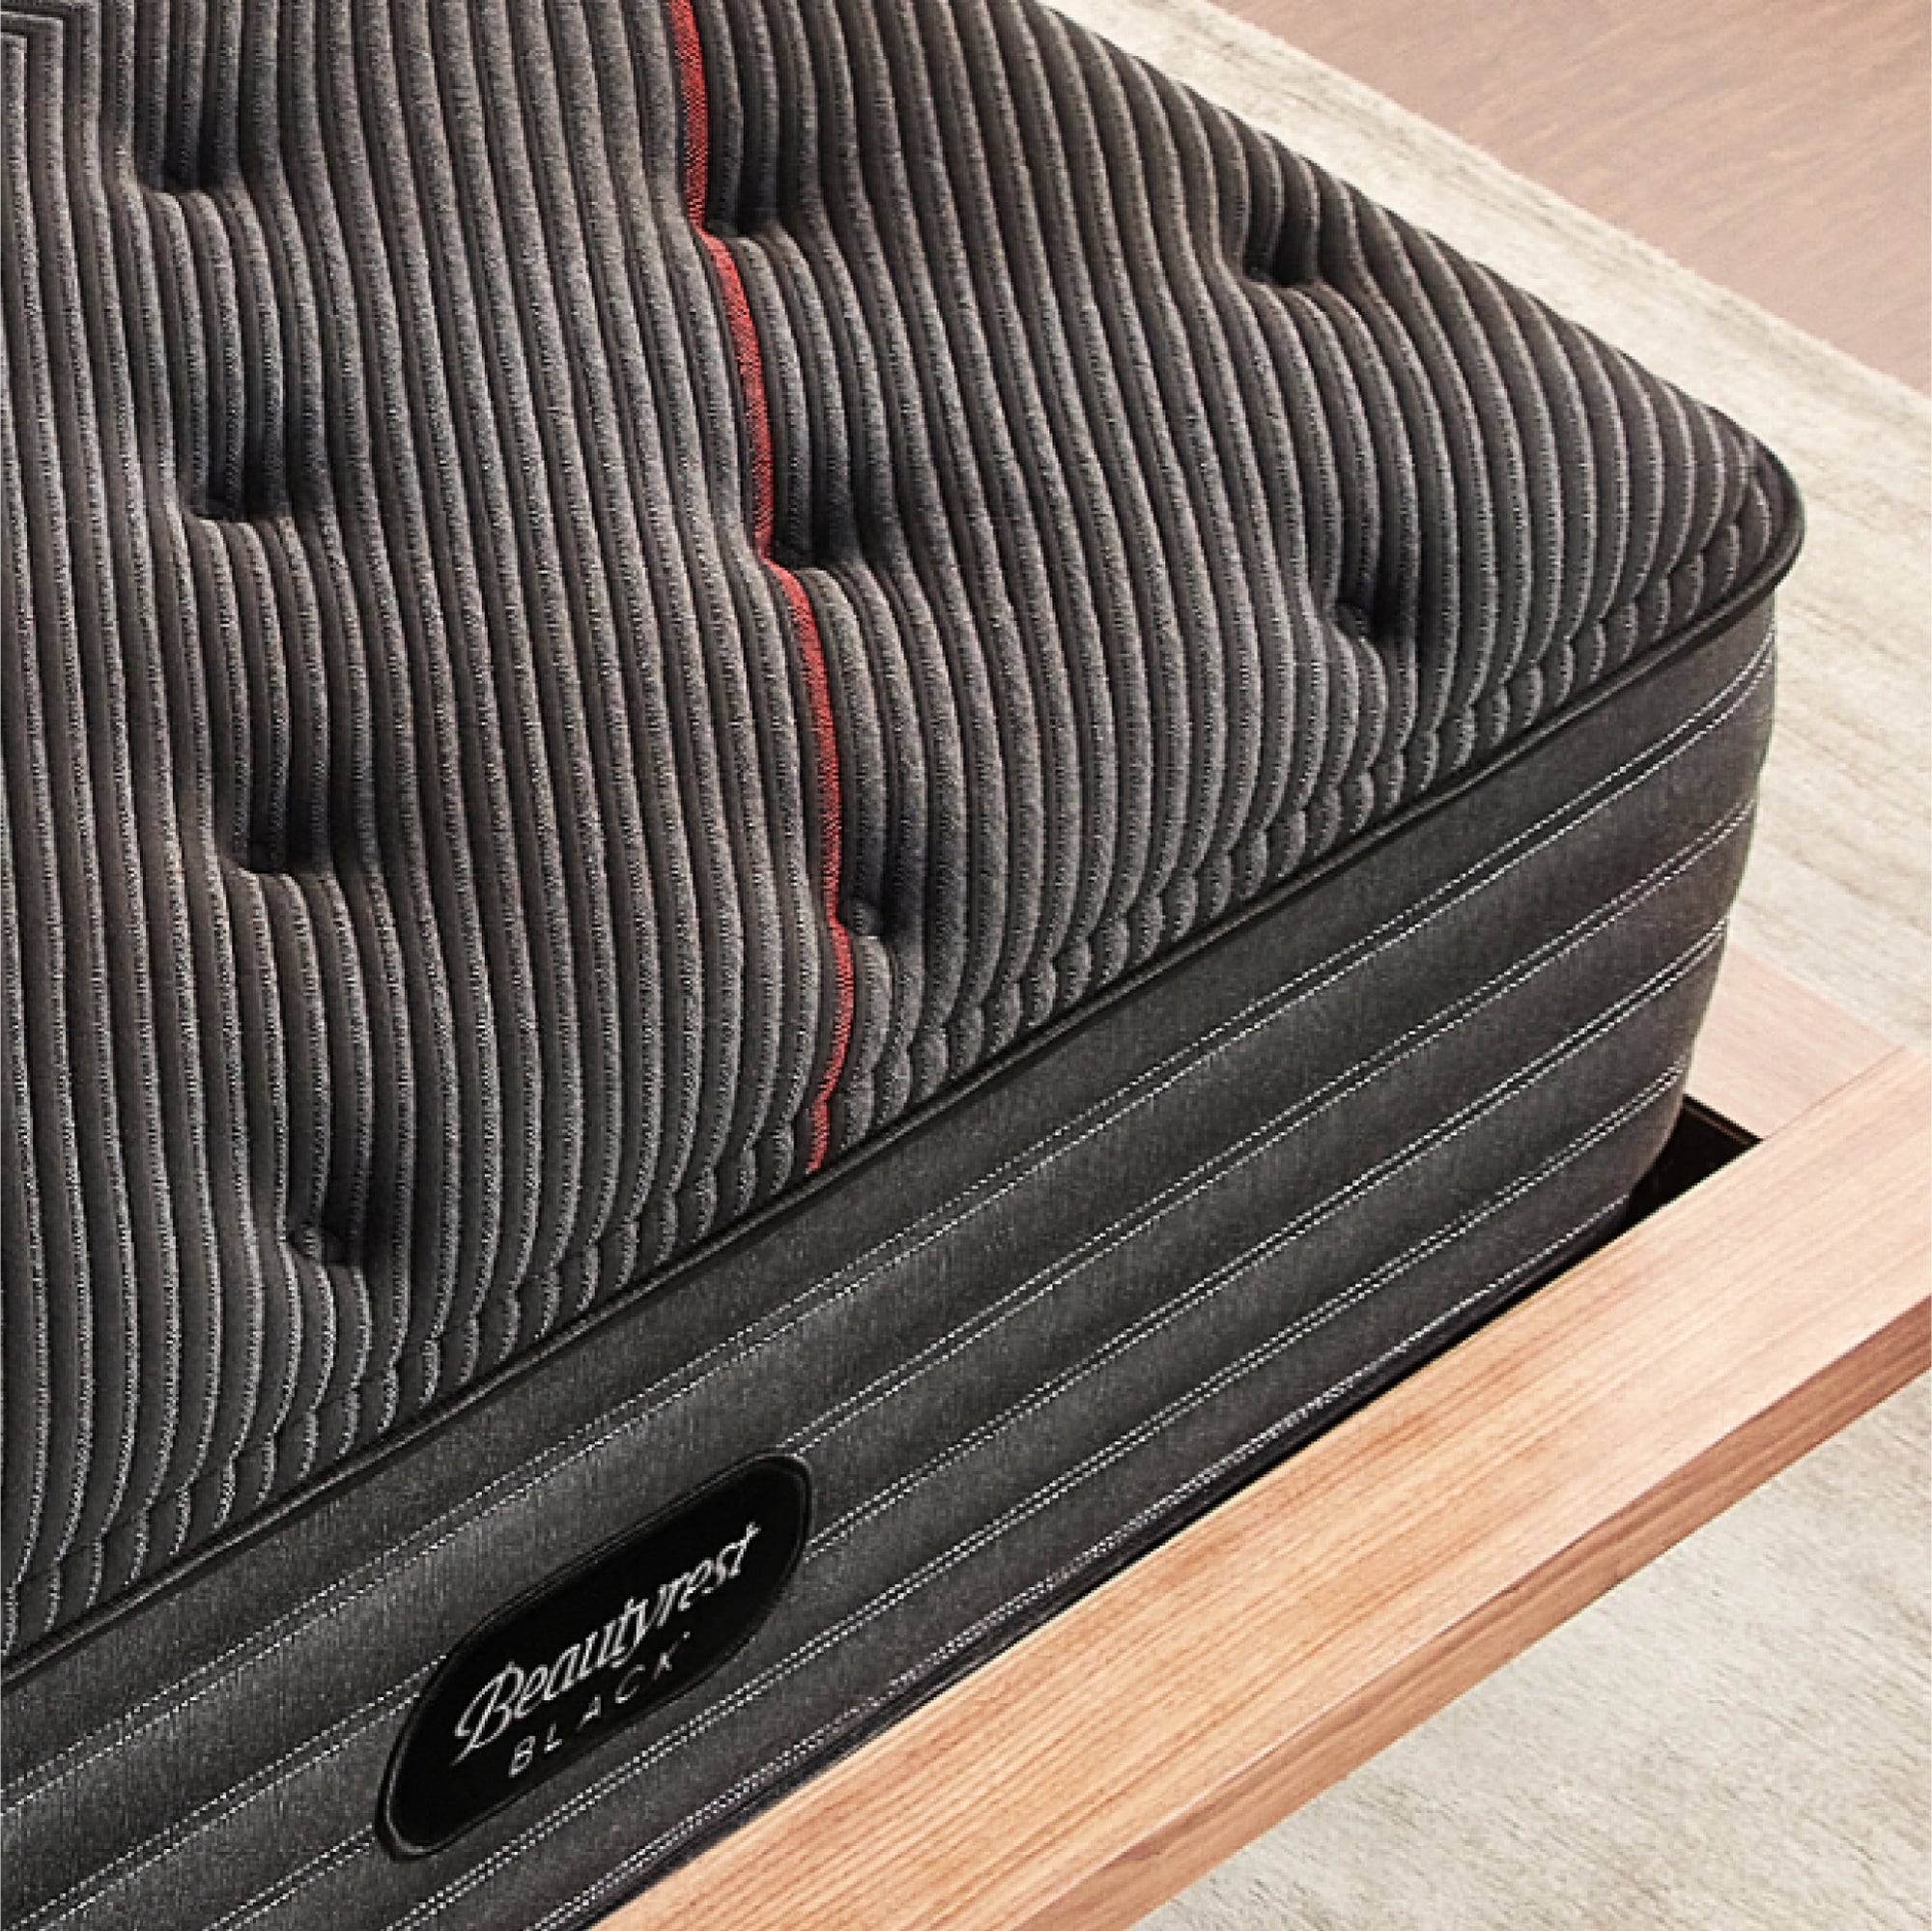 Corner view of the Beautyrest Black deluxe c-class mattress ||series: deluxe c-class|| feel: plush